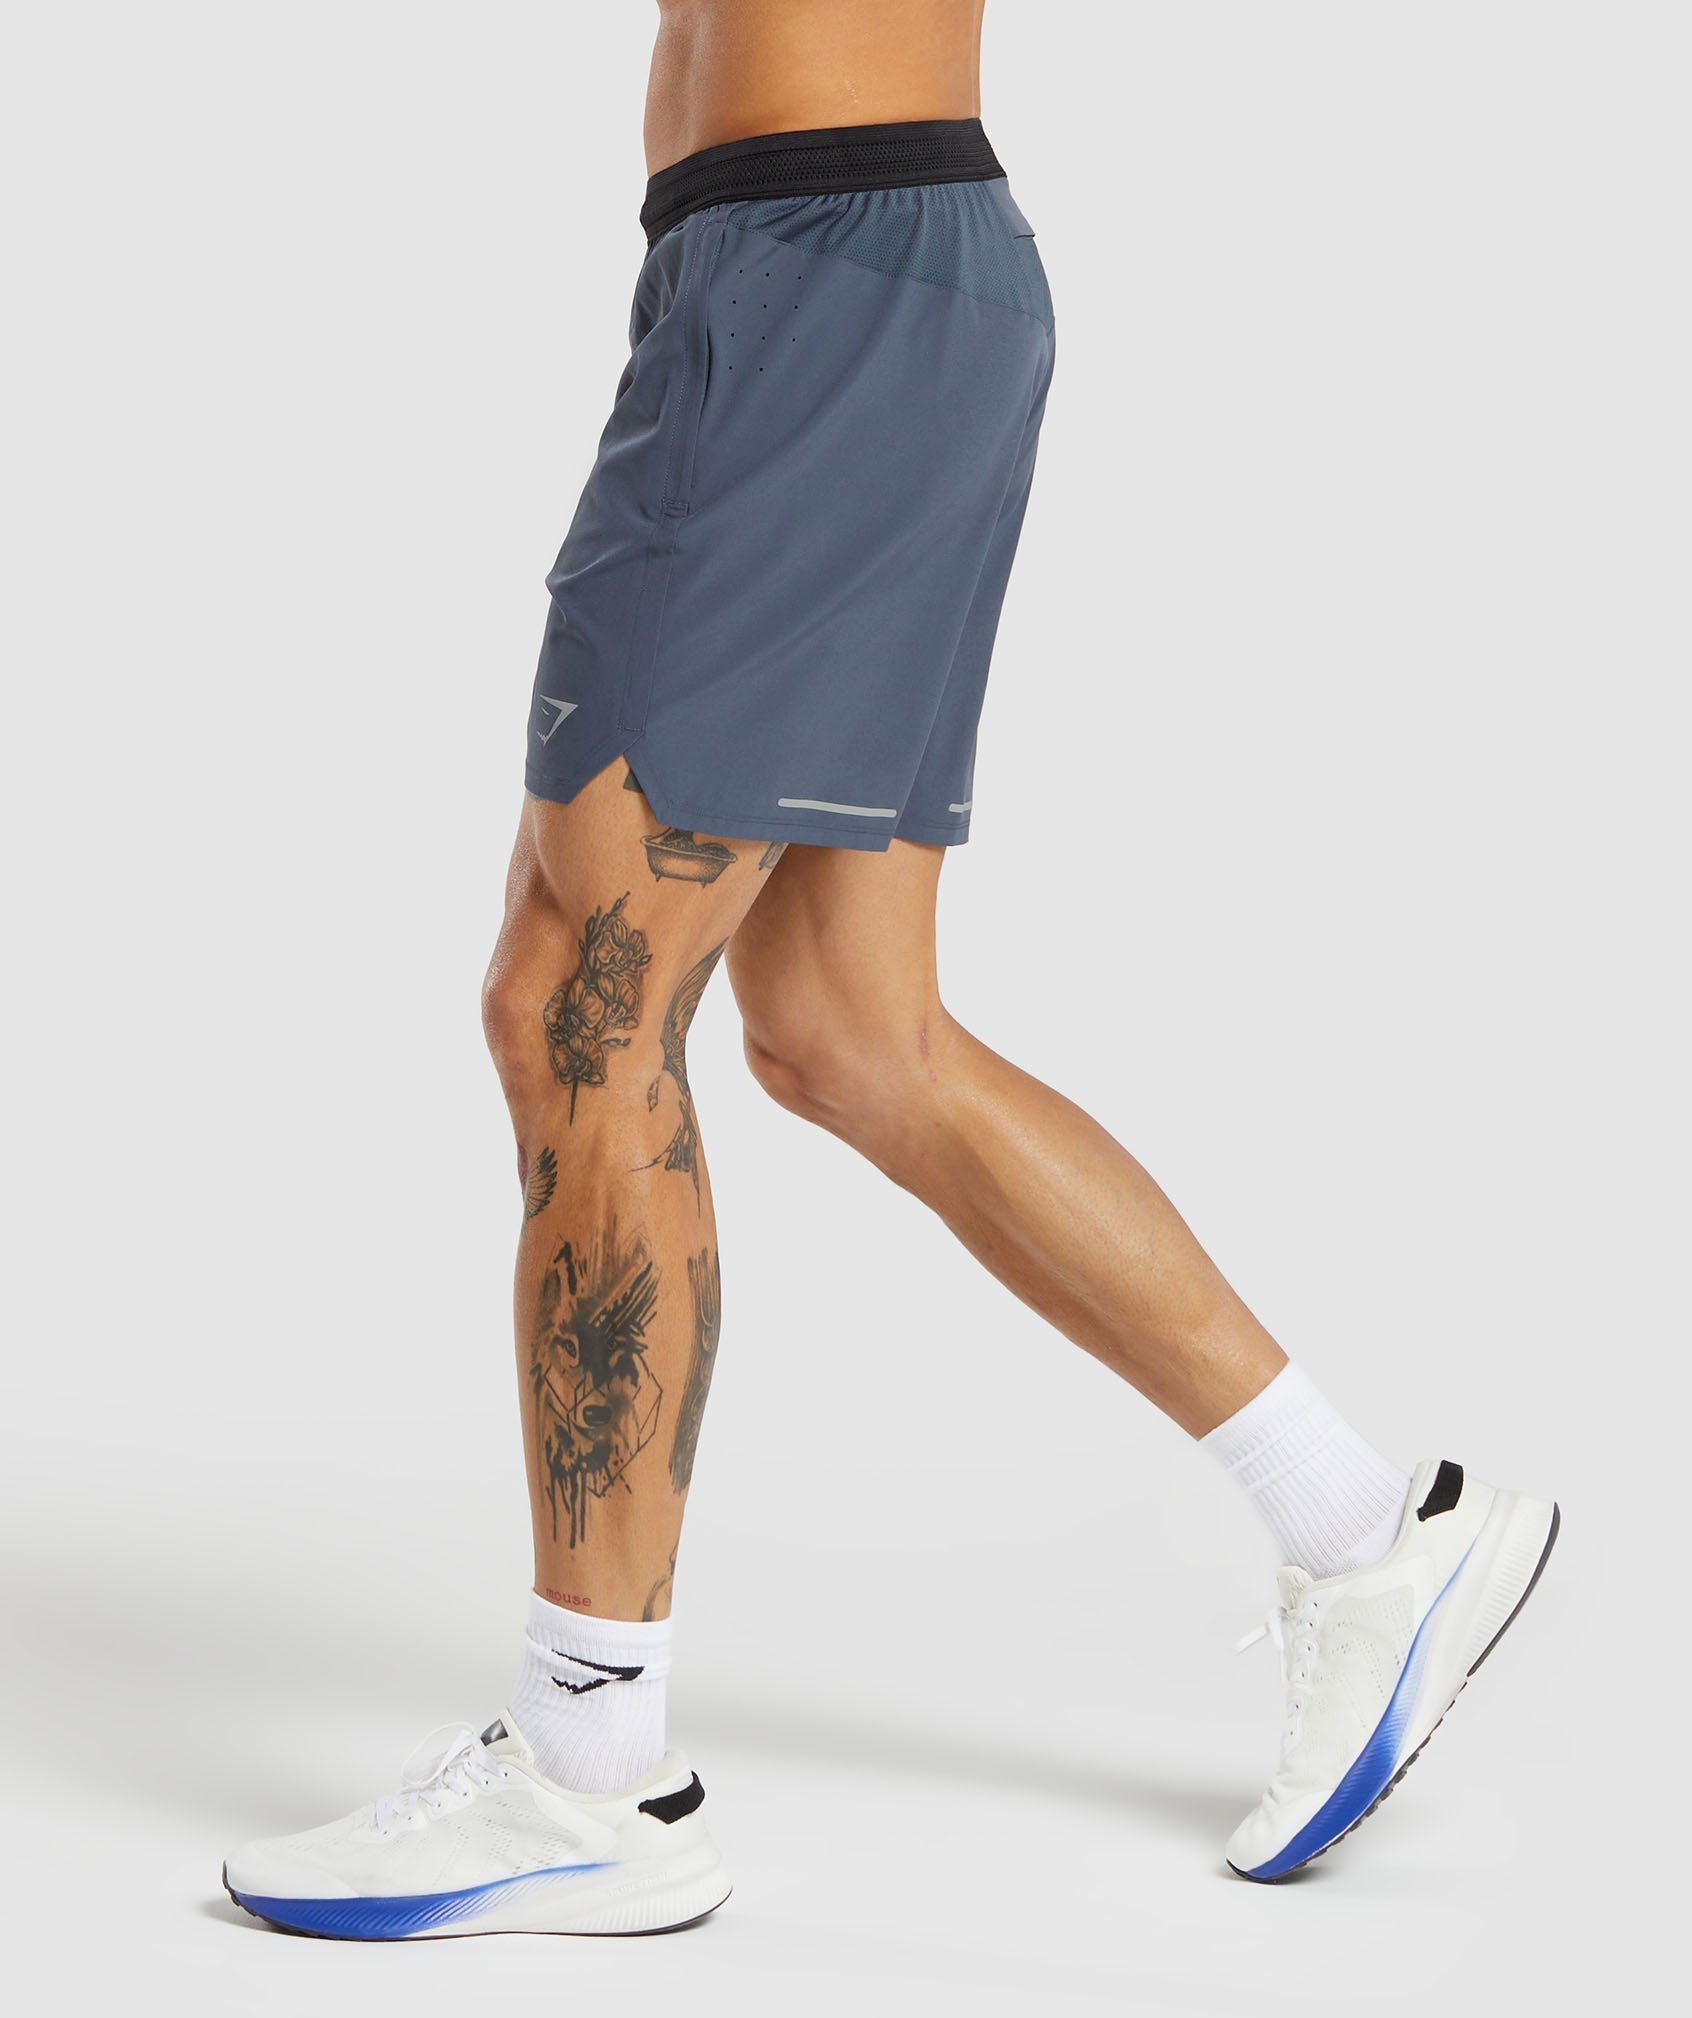 Speed 7" Shorts in Titanium Blue - view 3